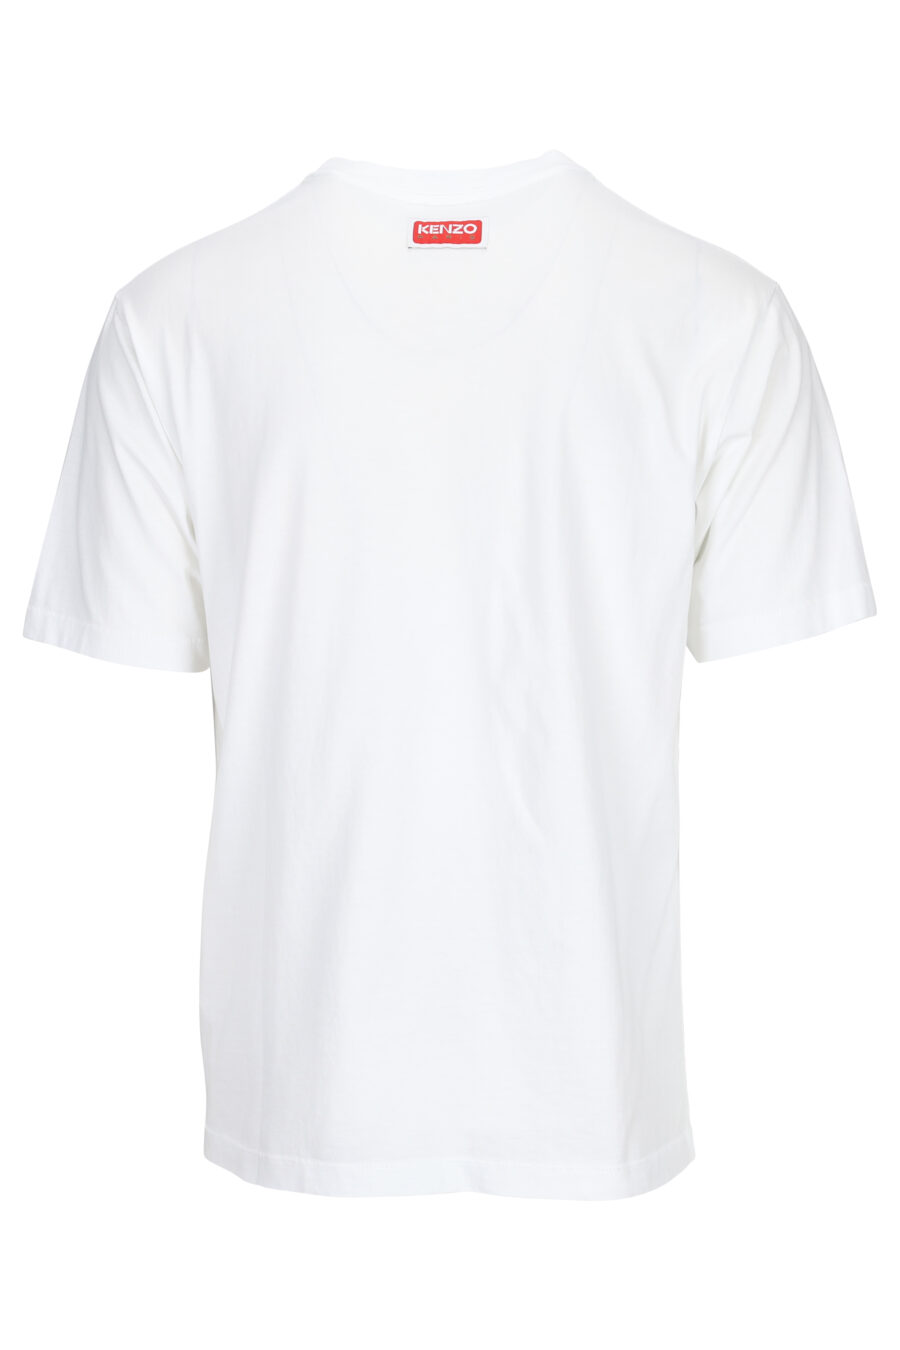 T-shirt blanc avec minilogue éléphant - 3612230553590 1